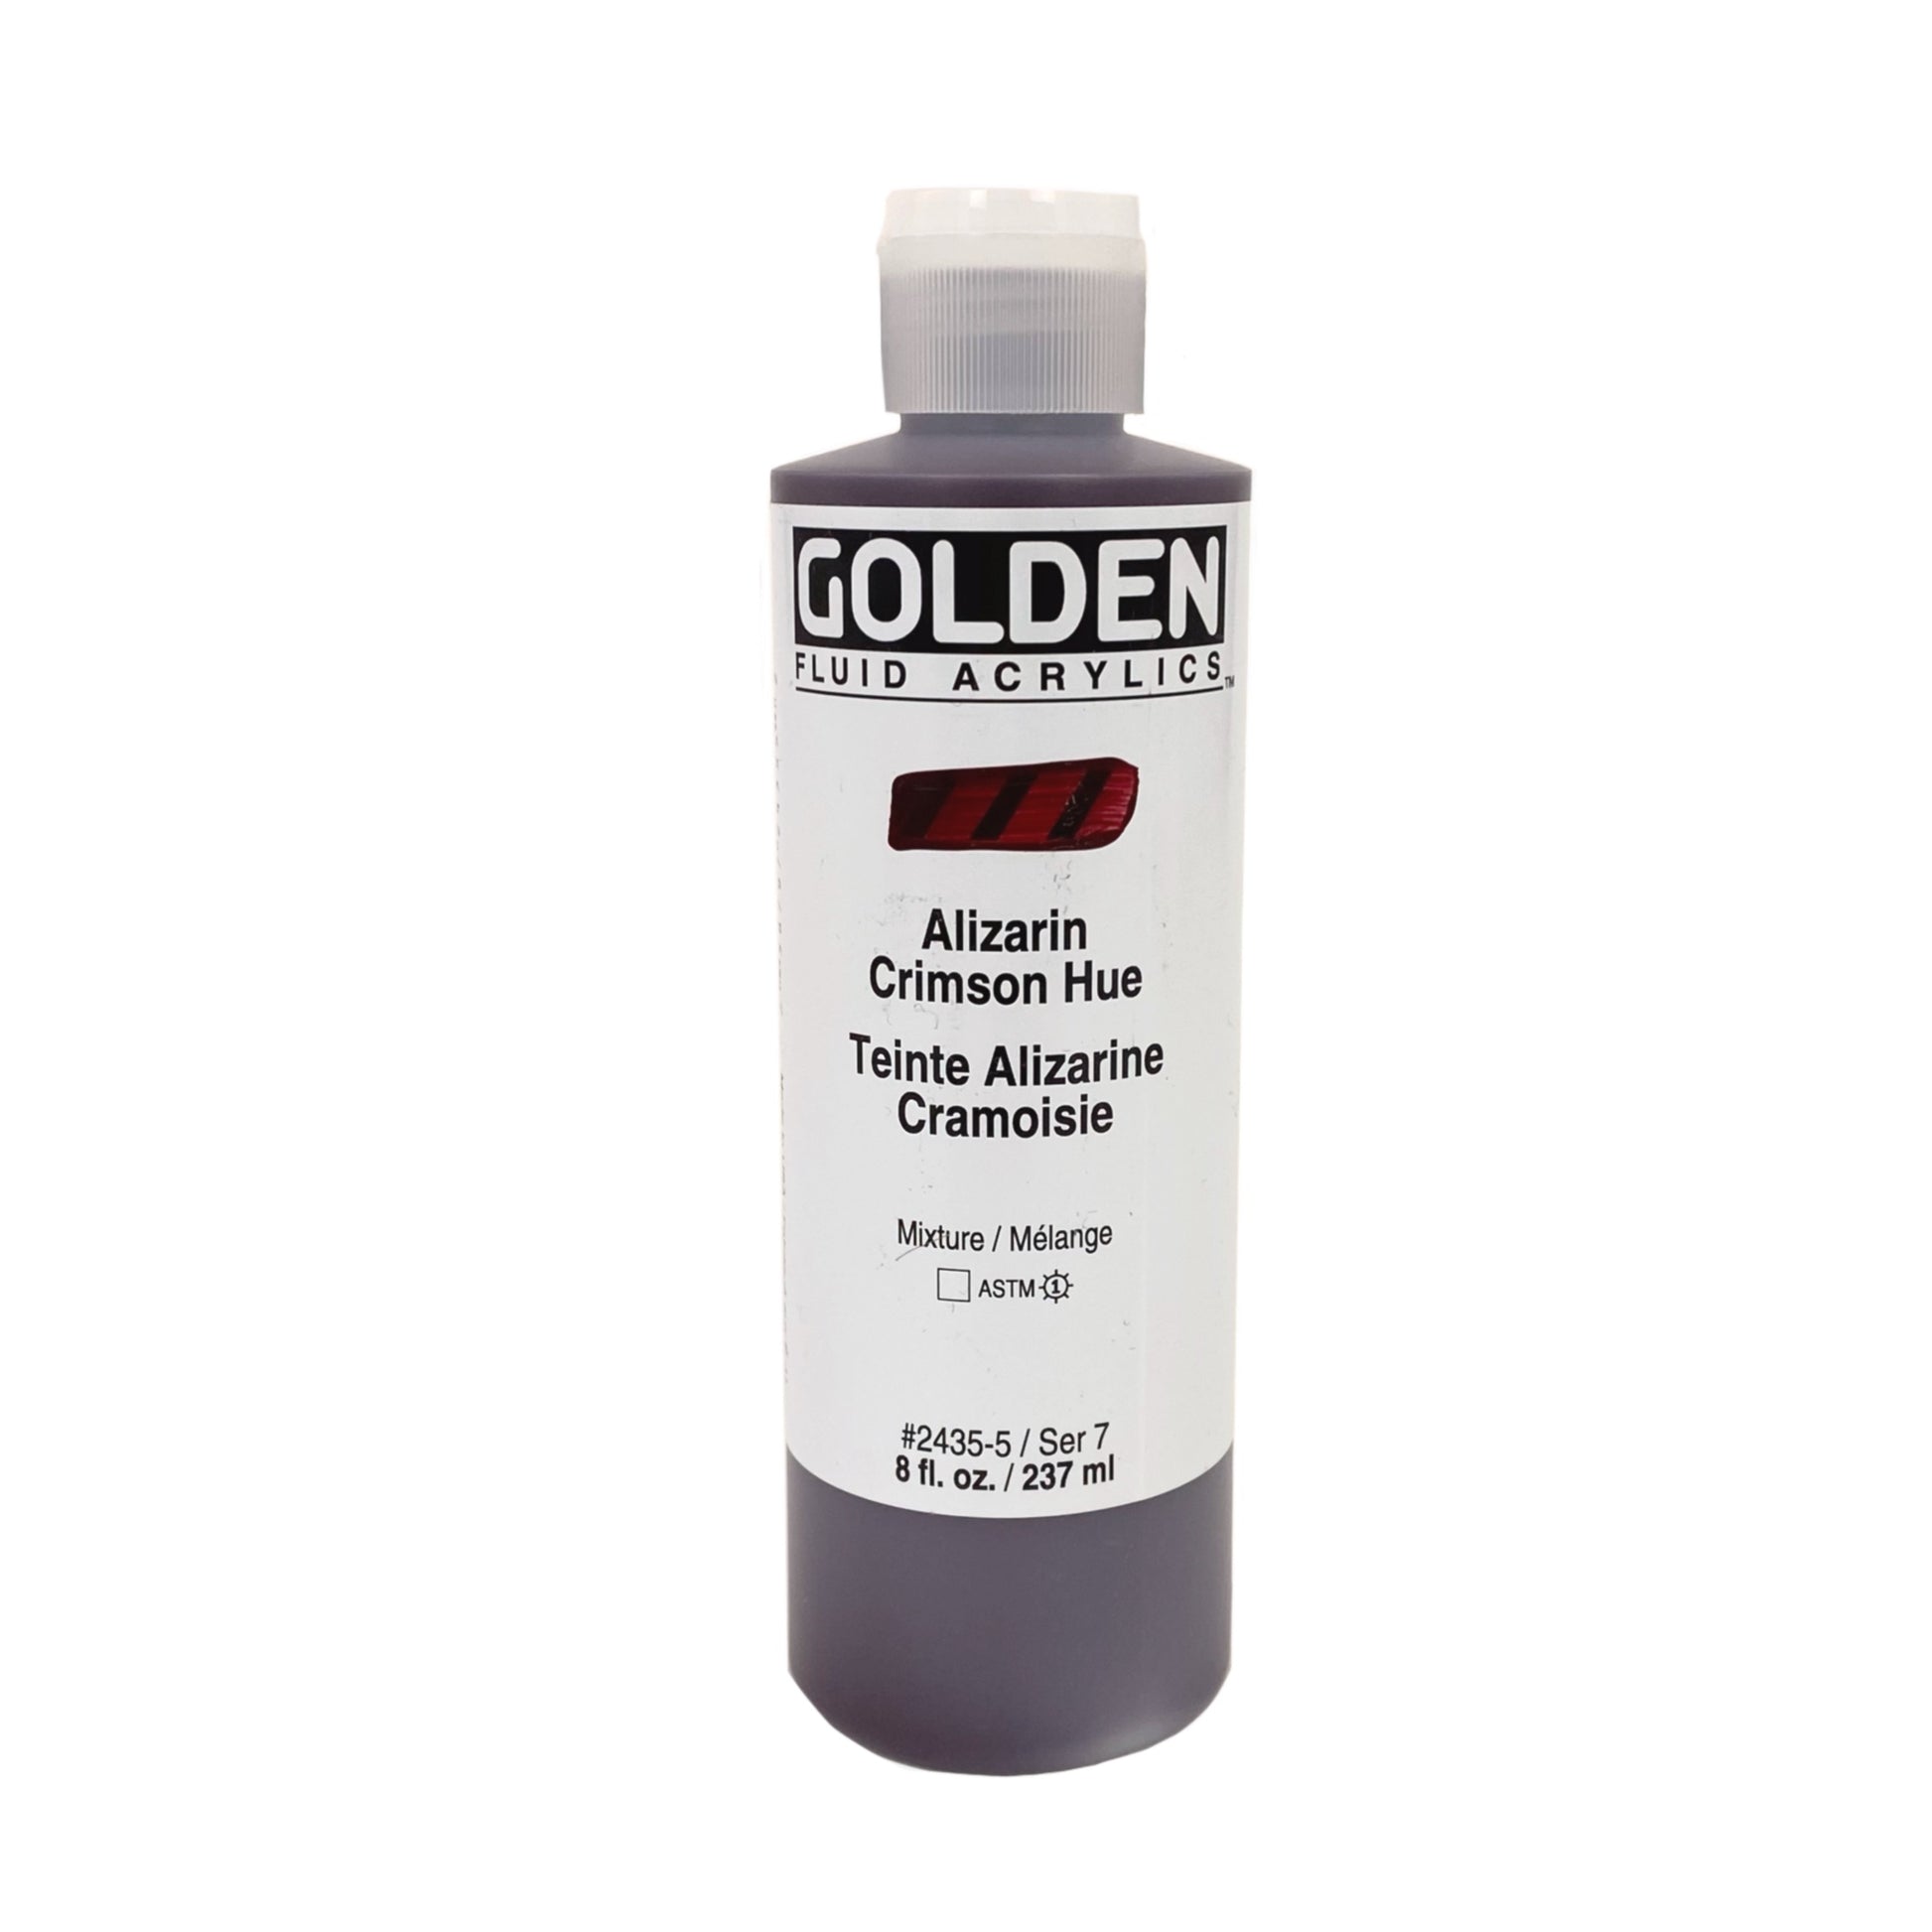 Golden Fluid Acrylic Alizarin Crimson Hue 8 oz